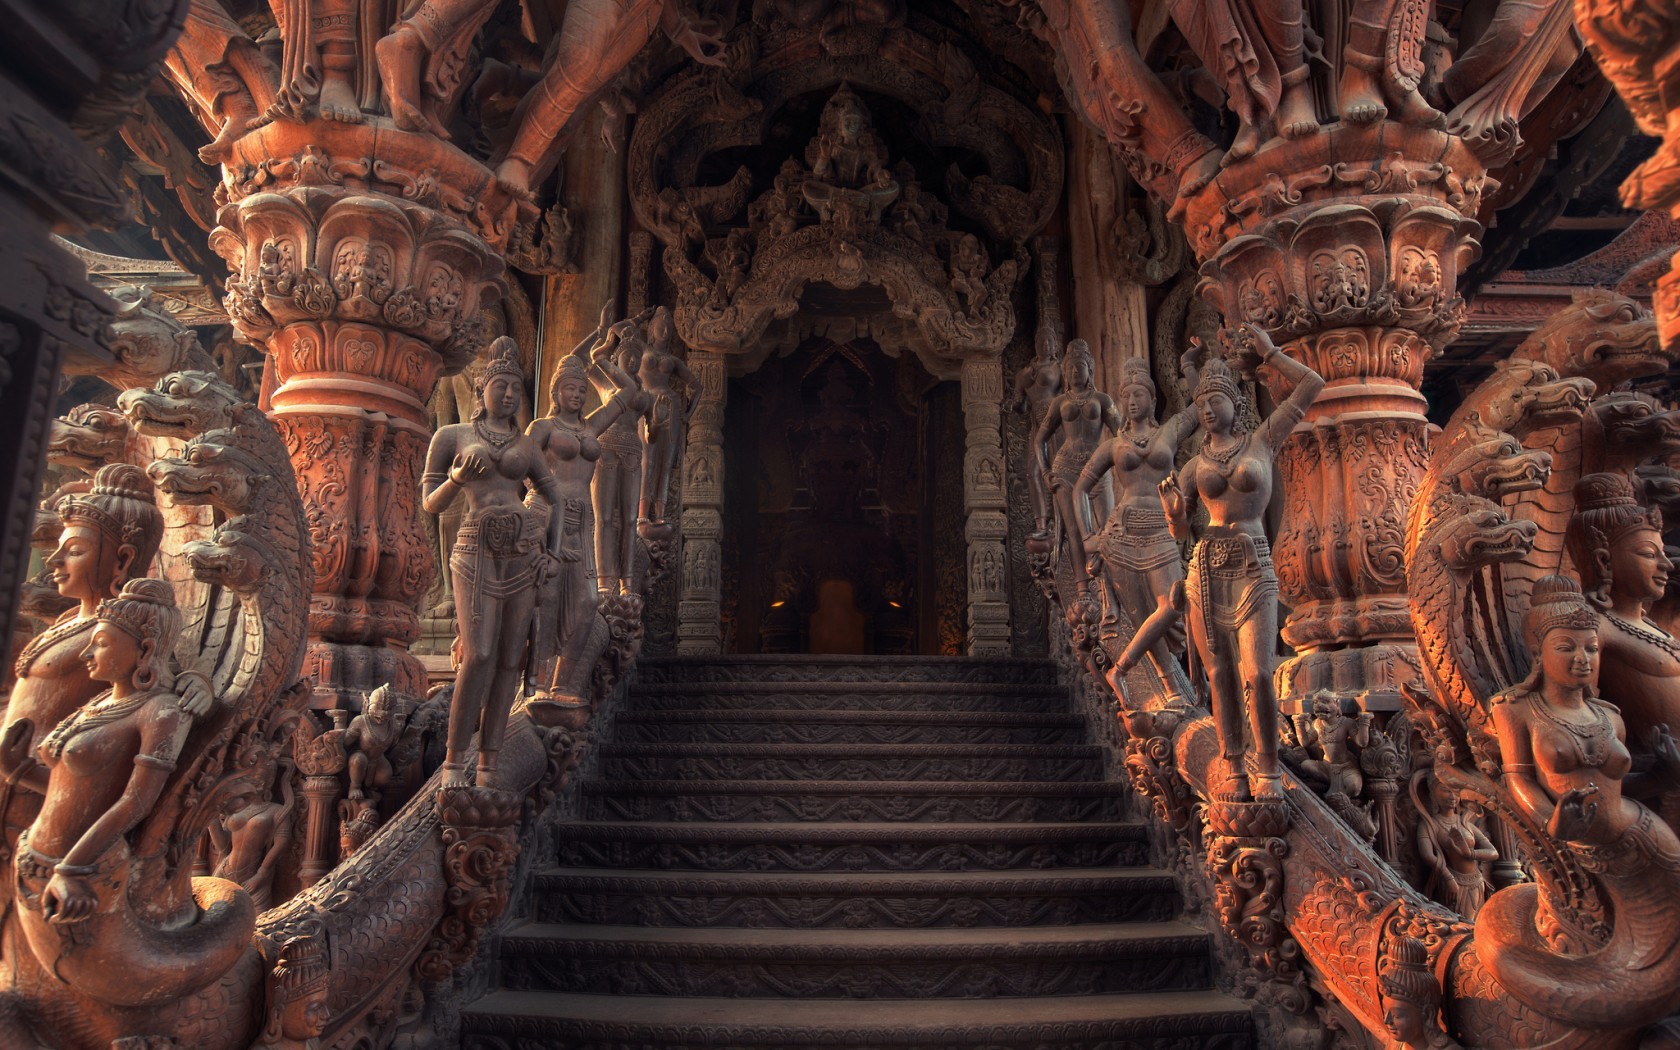 Architecture Interior Staircase HDR India Religion Sculpture Women Dragon Door Hindu Architecture Hi 1680x1050